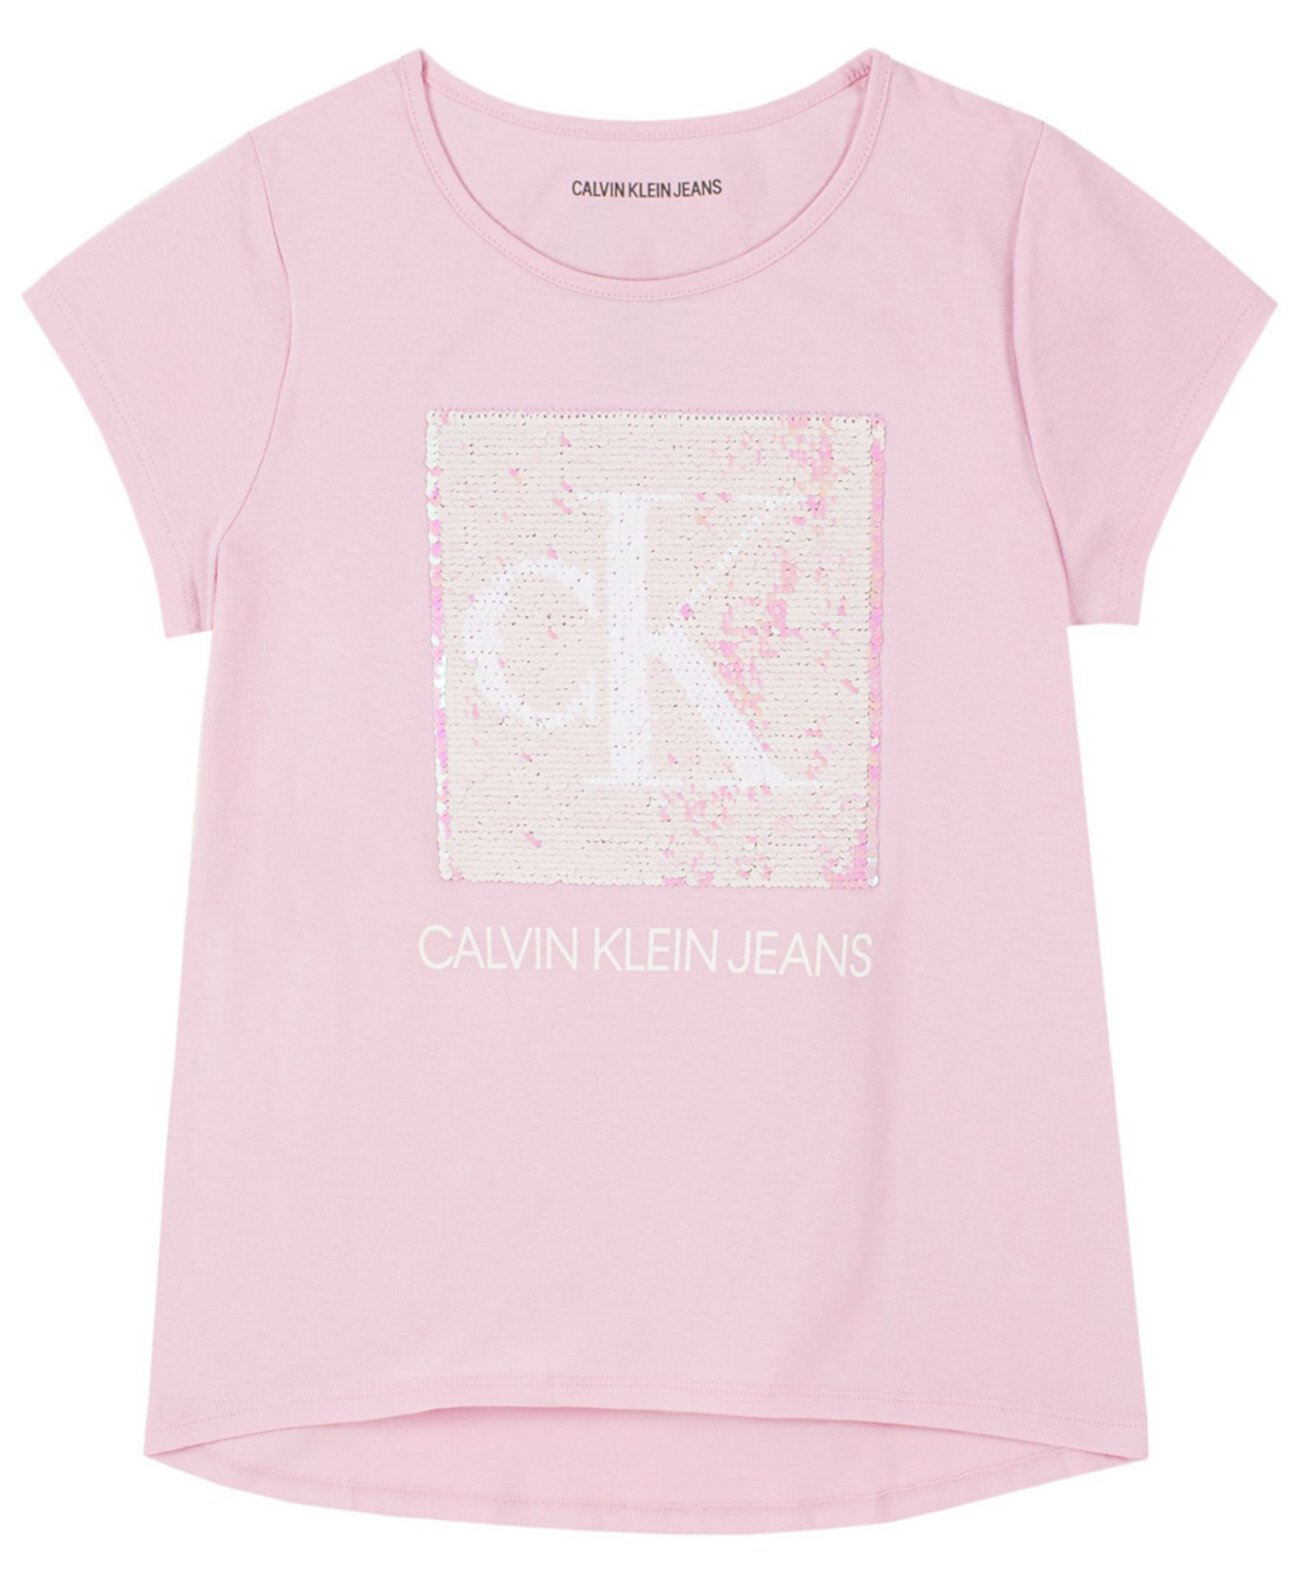 Флип-футболка с пайетками Big Girls Calvin Klein